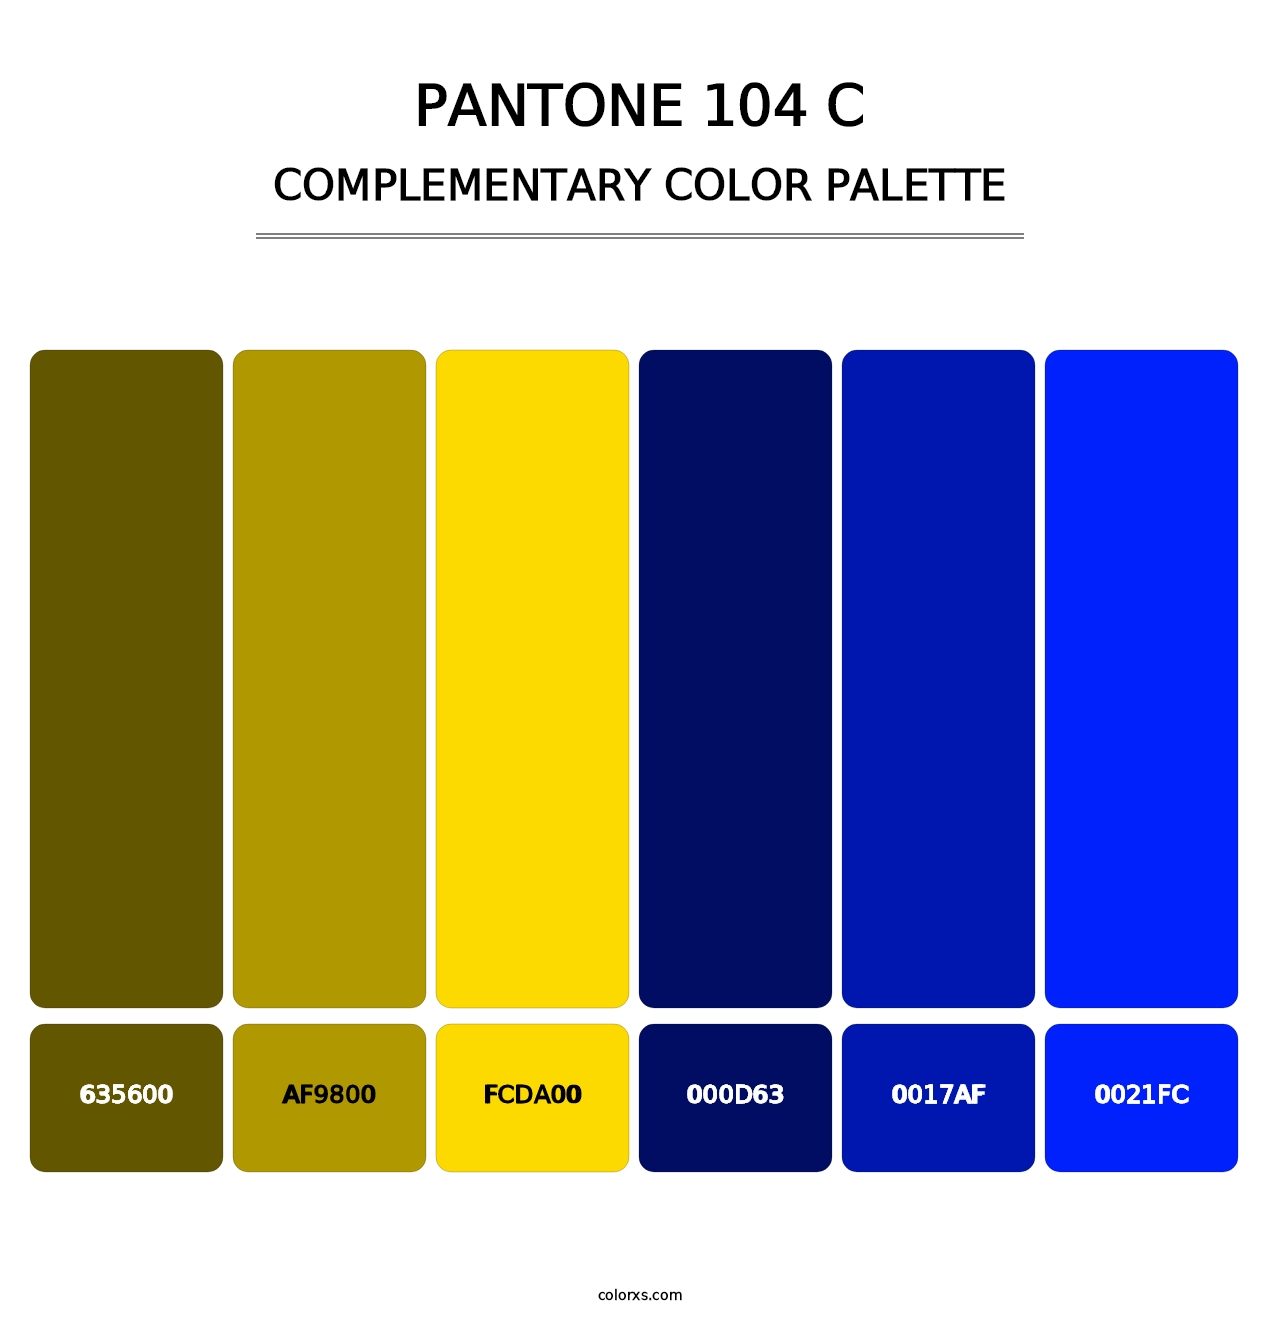 PANTONE 104 C - Complementary Color Palette